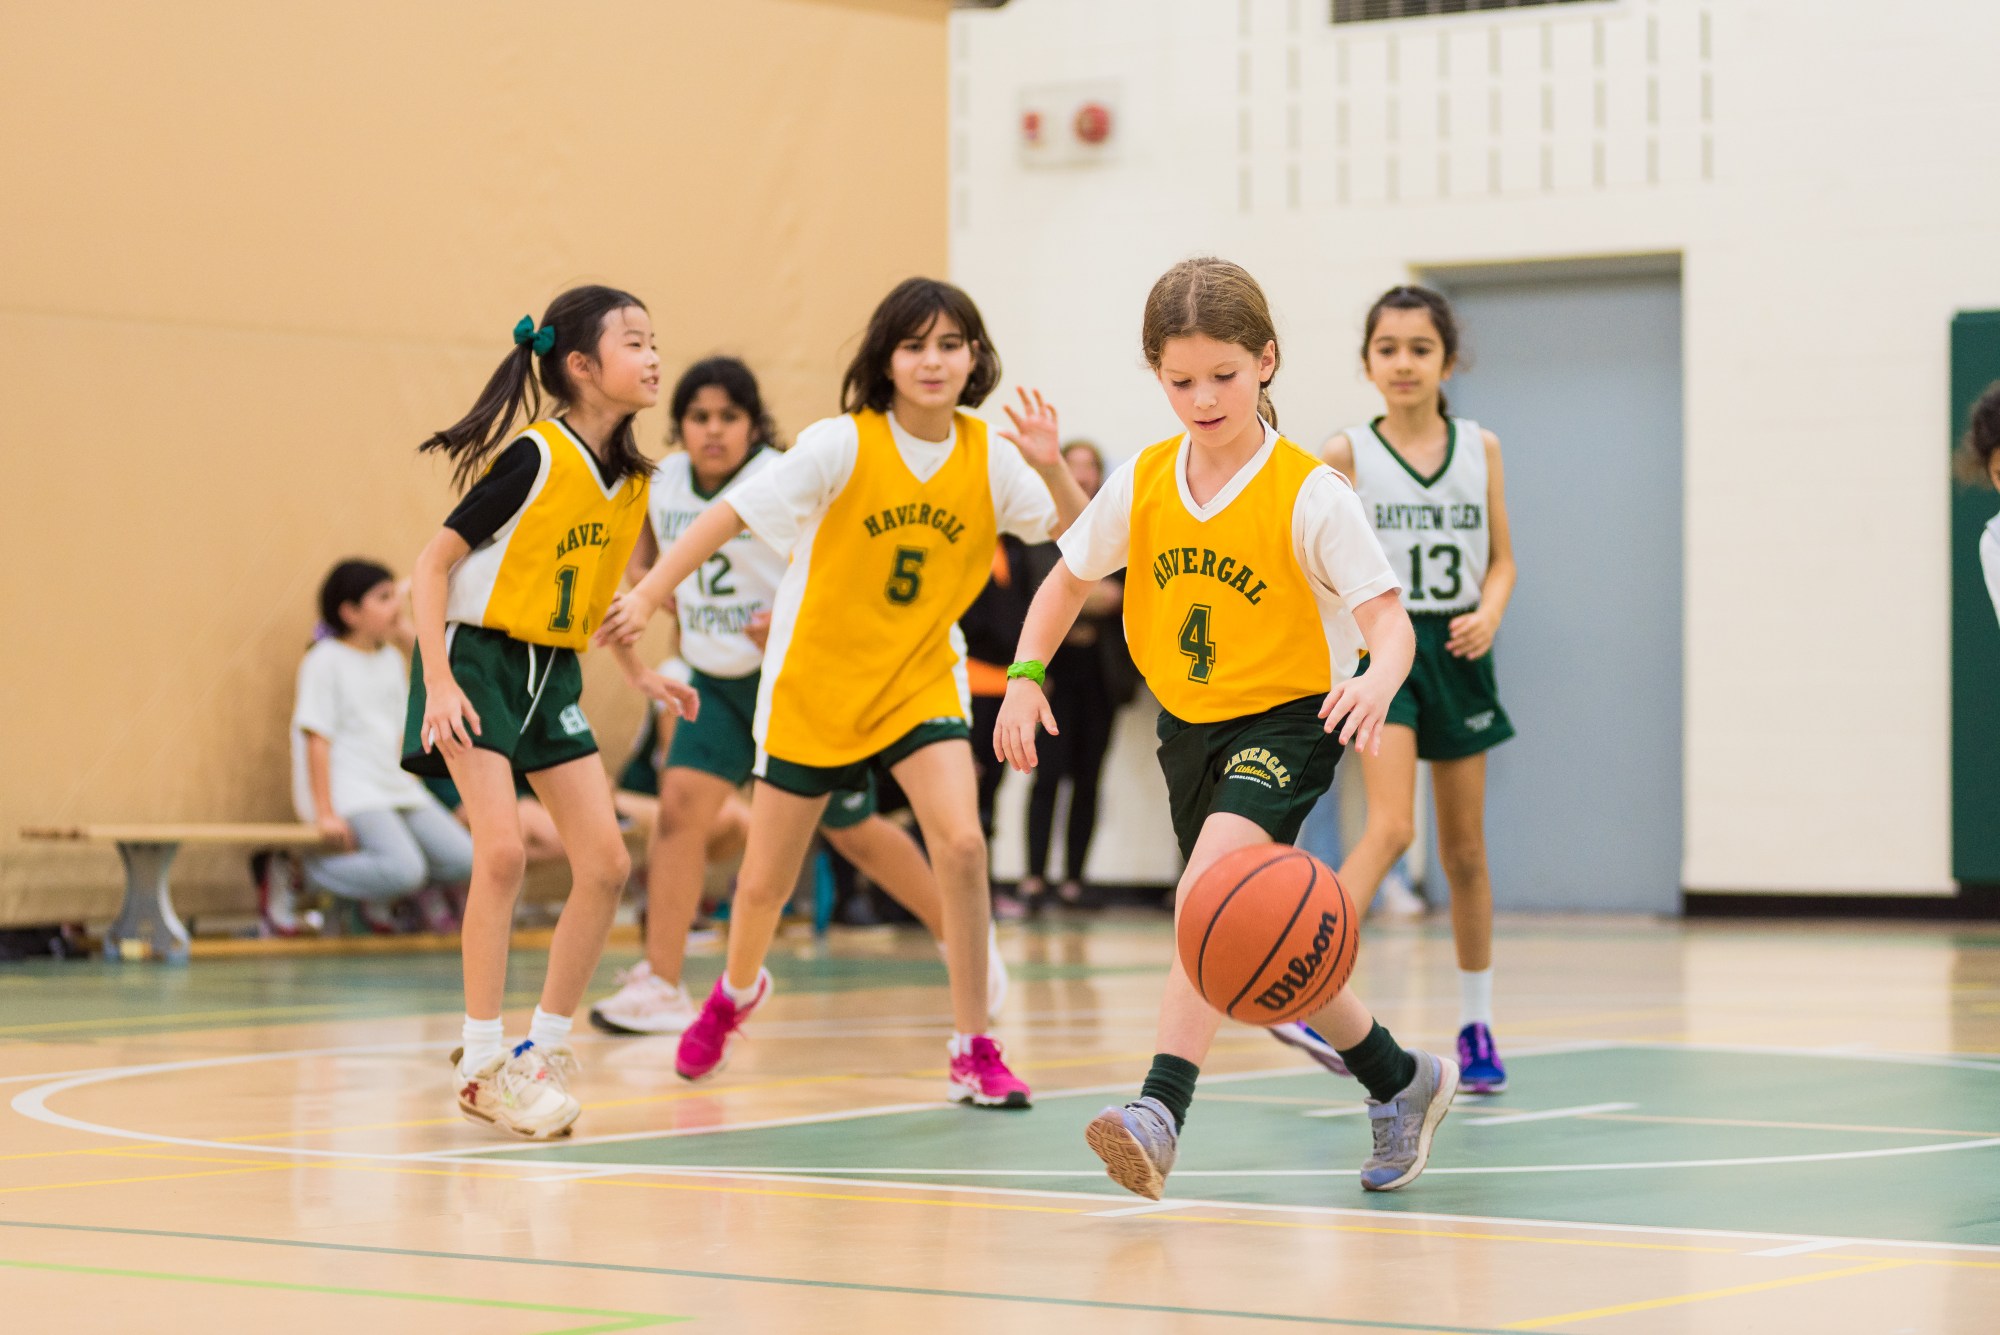 Junior School students playing basketball.